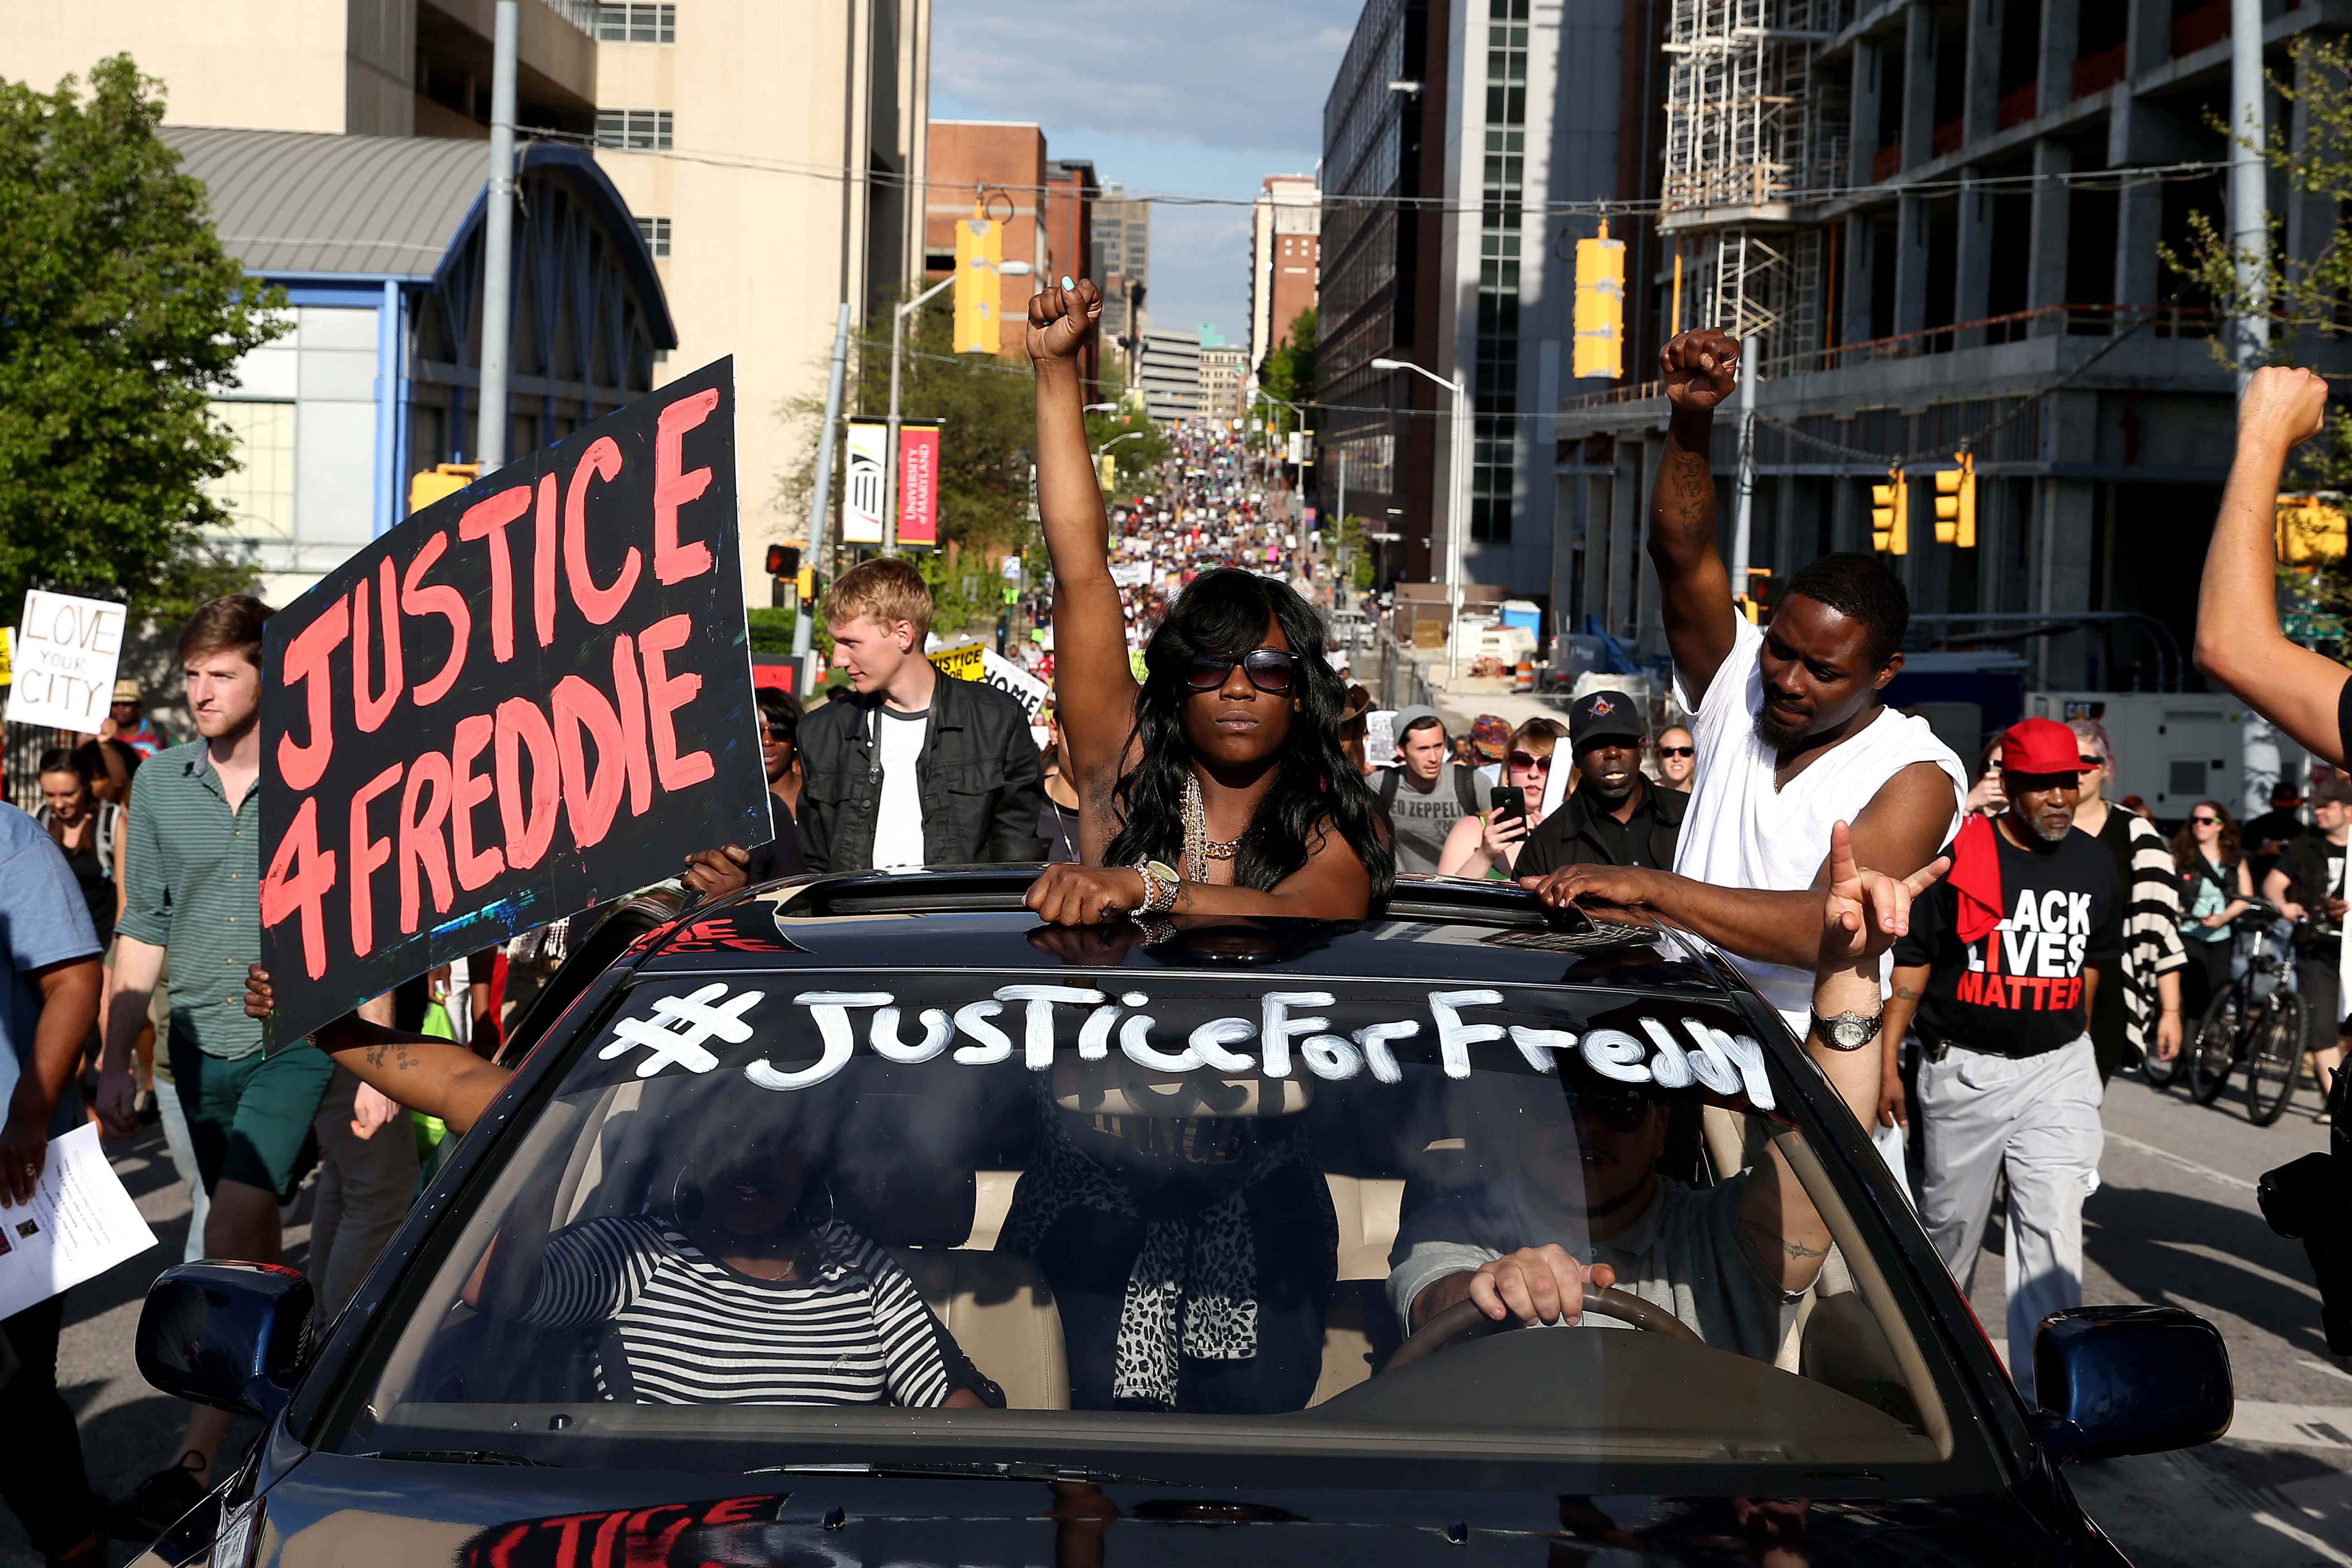 National News, Freddie Gray, Baltimore Uprising, Black Lives Matter, Racial Discrimination, Police Brutality